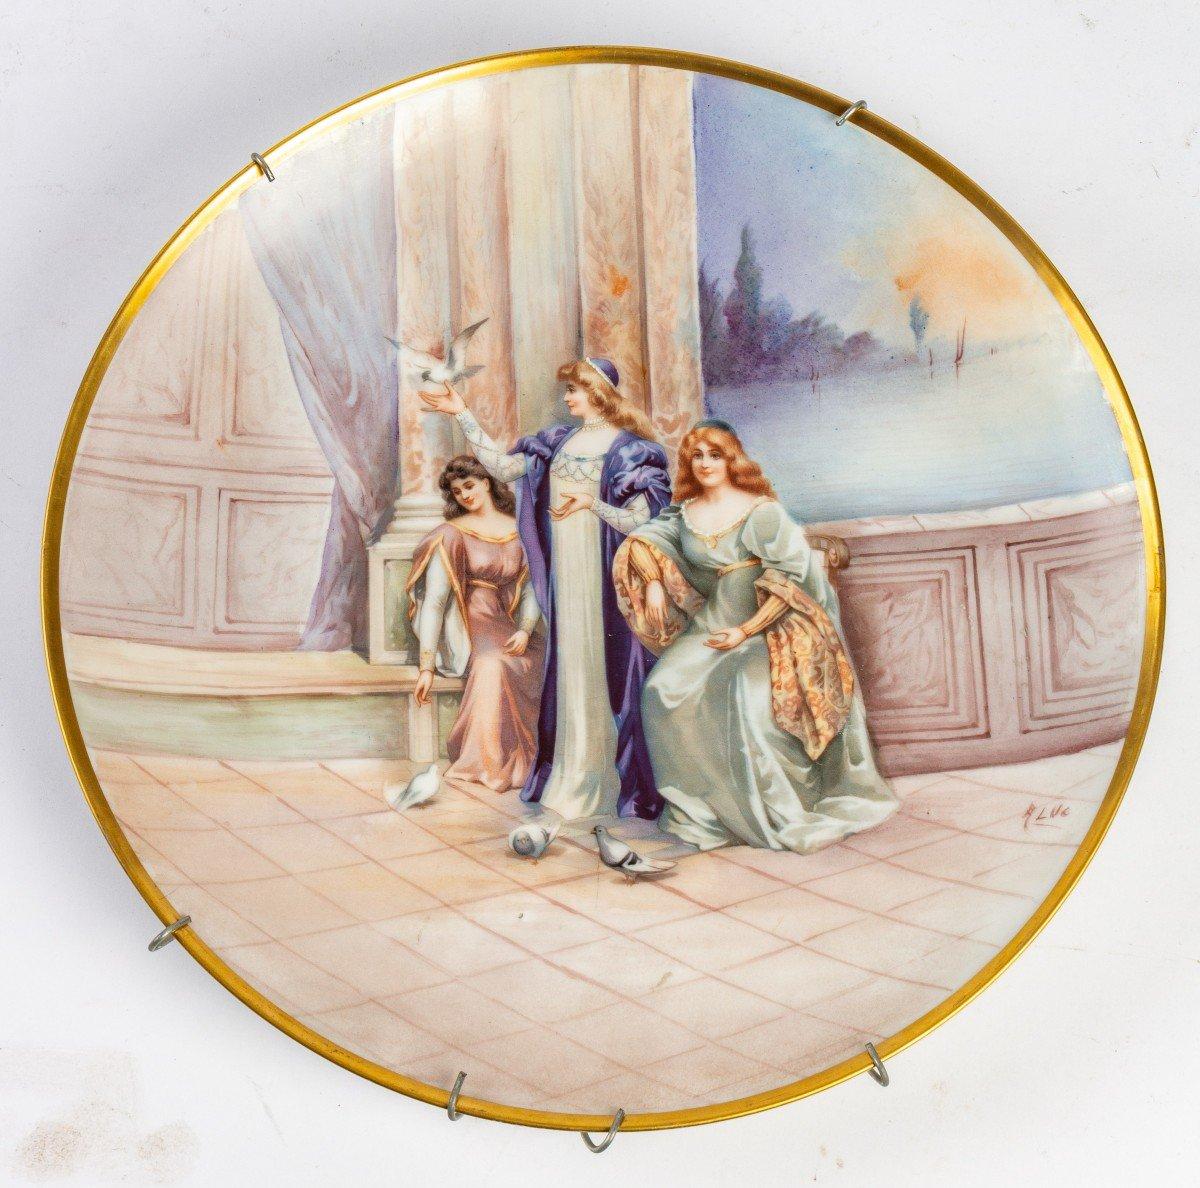 A pair of porcelain plates 19th century
A pair of porcelain plates representing two scenes
Measure: Diameter 52 cm.